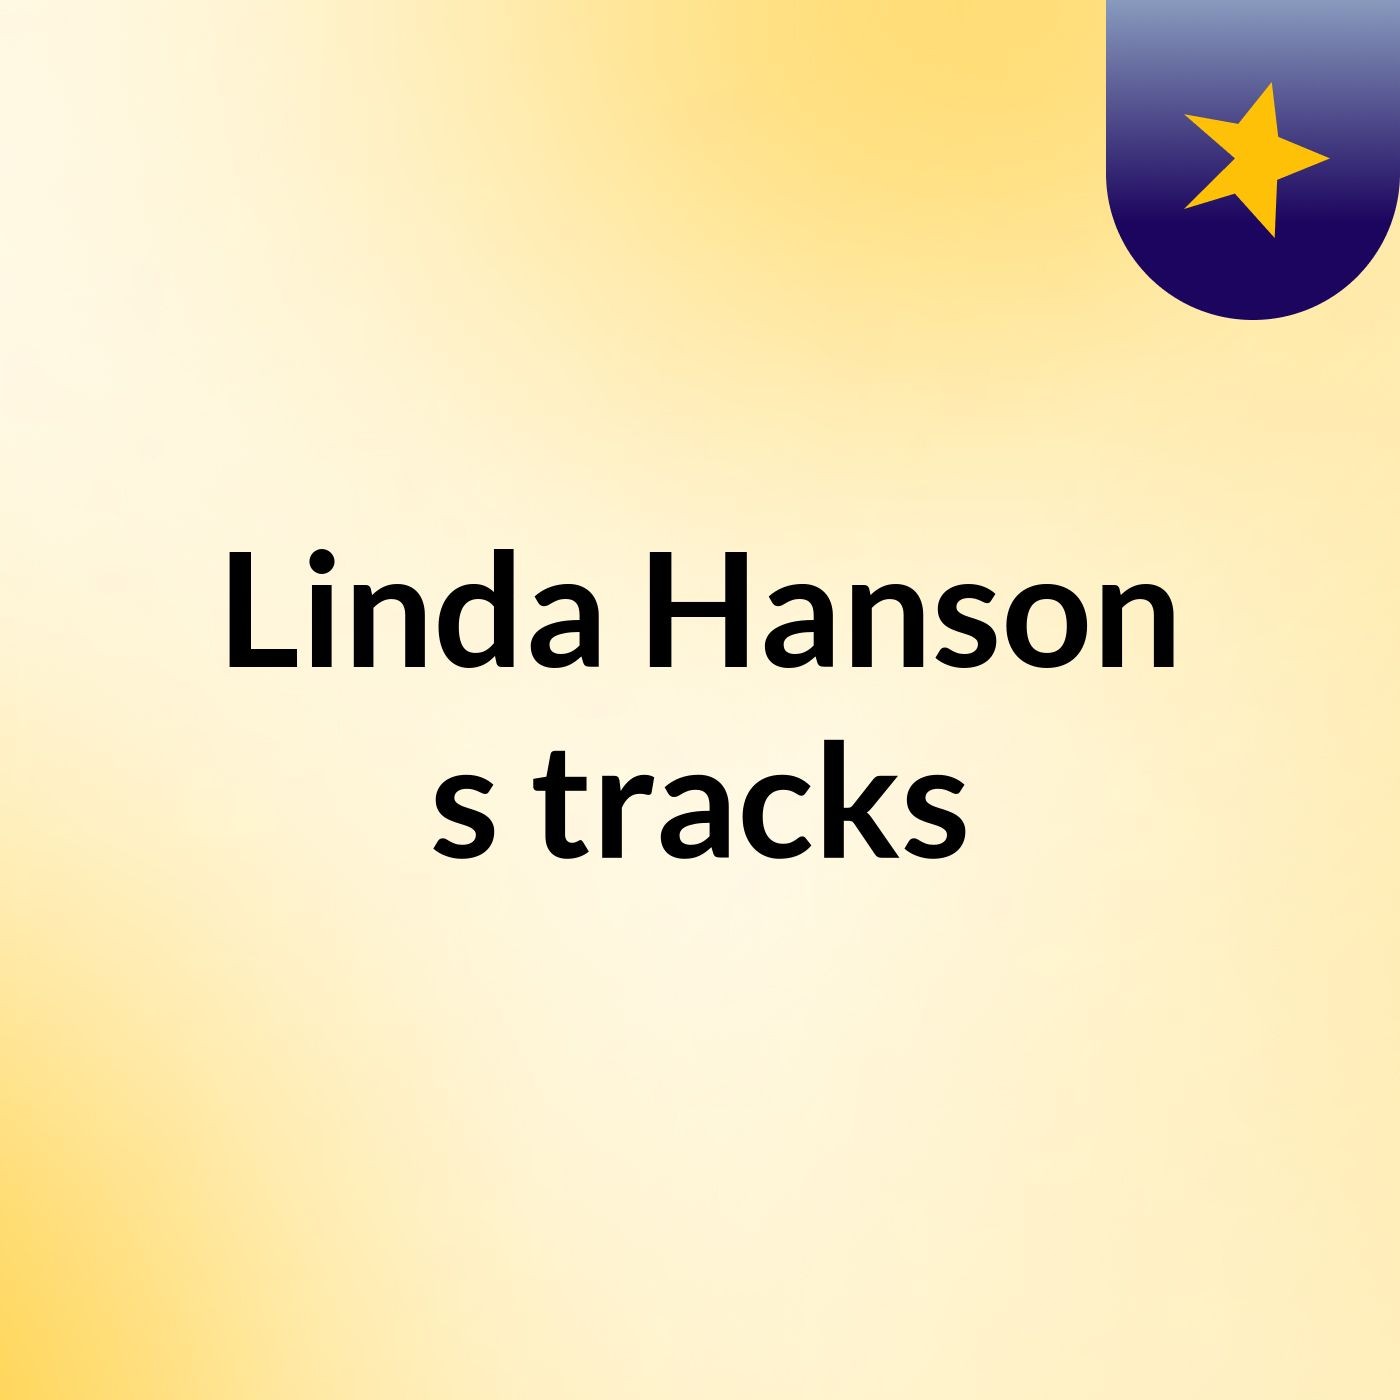 Linda Hanson's tracks